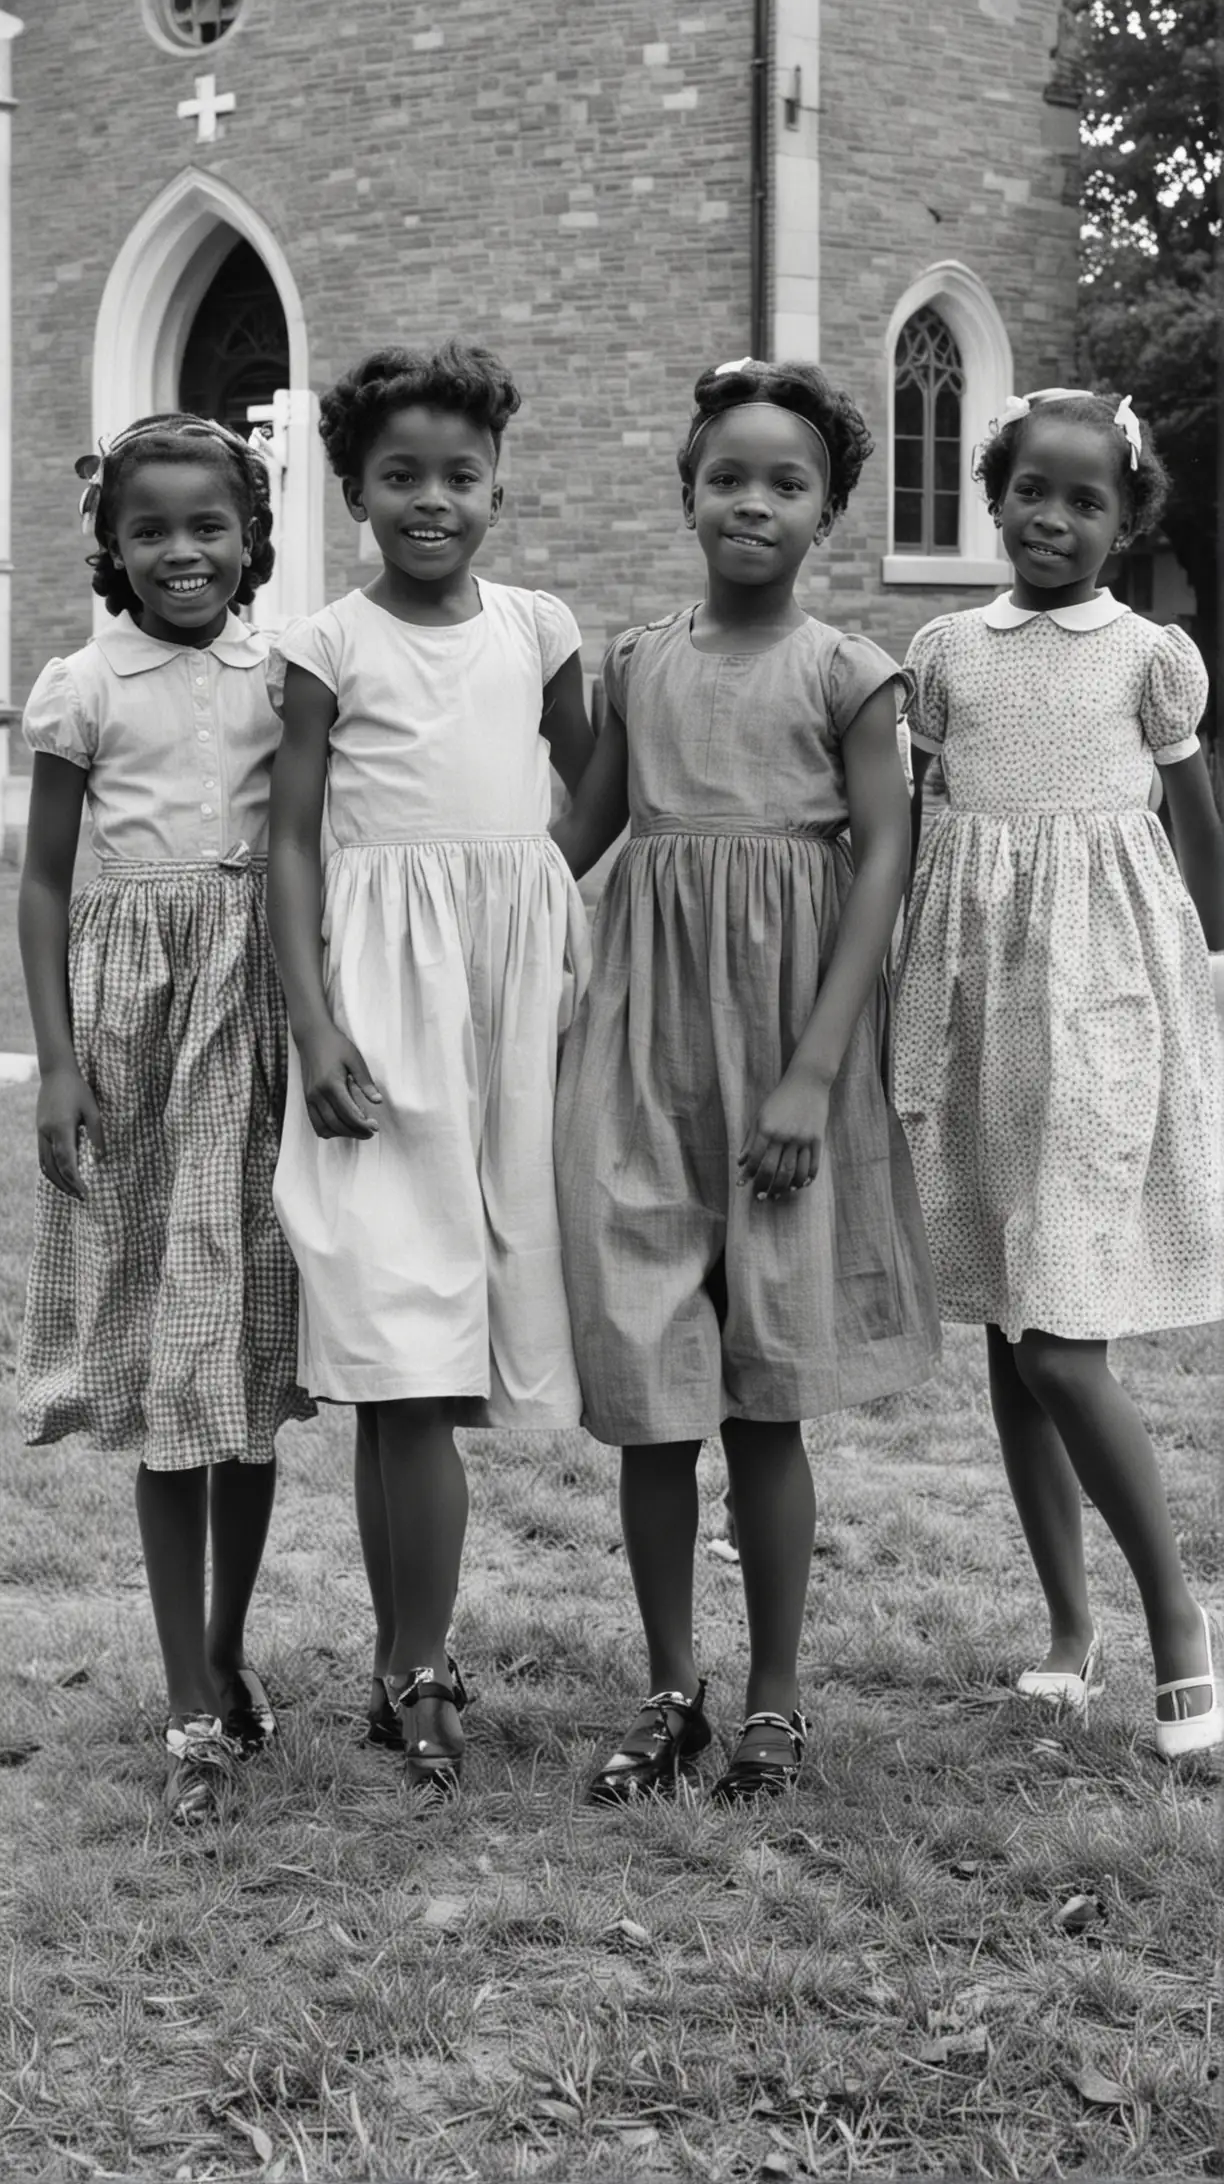 1950s Black Girls Playing Outside a Church